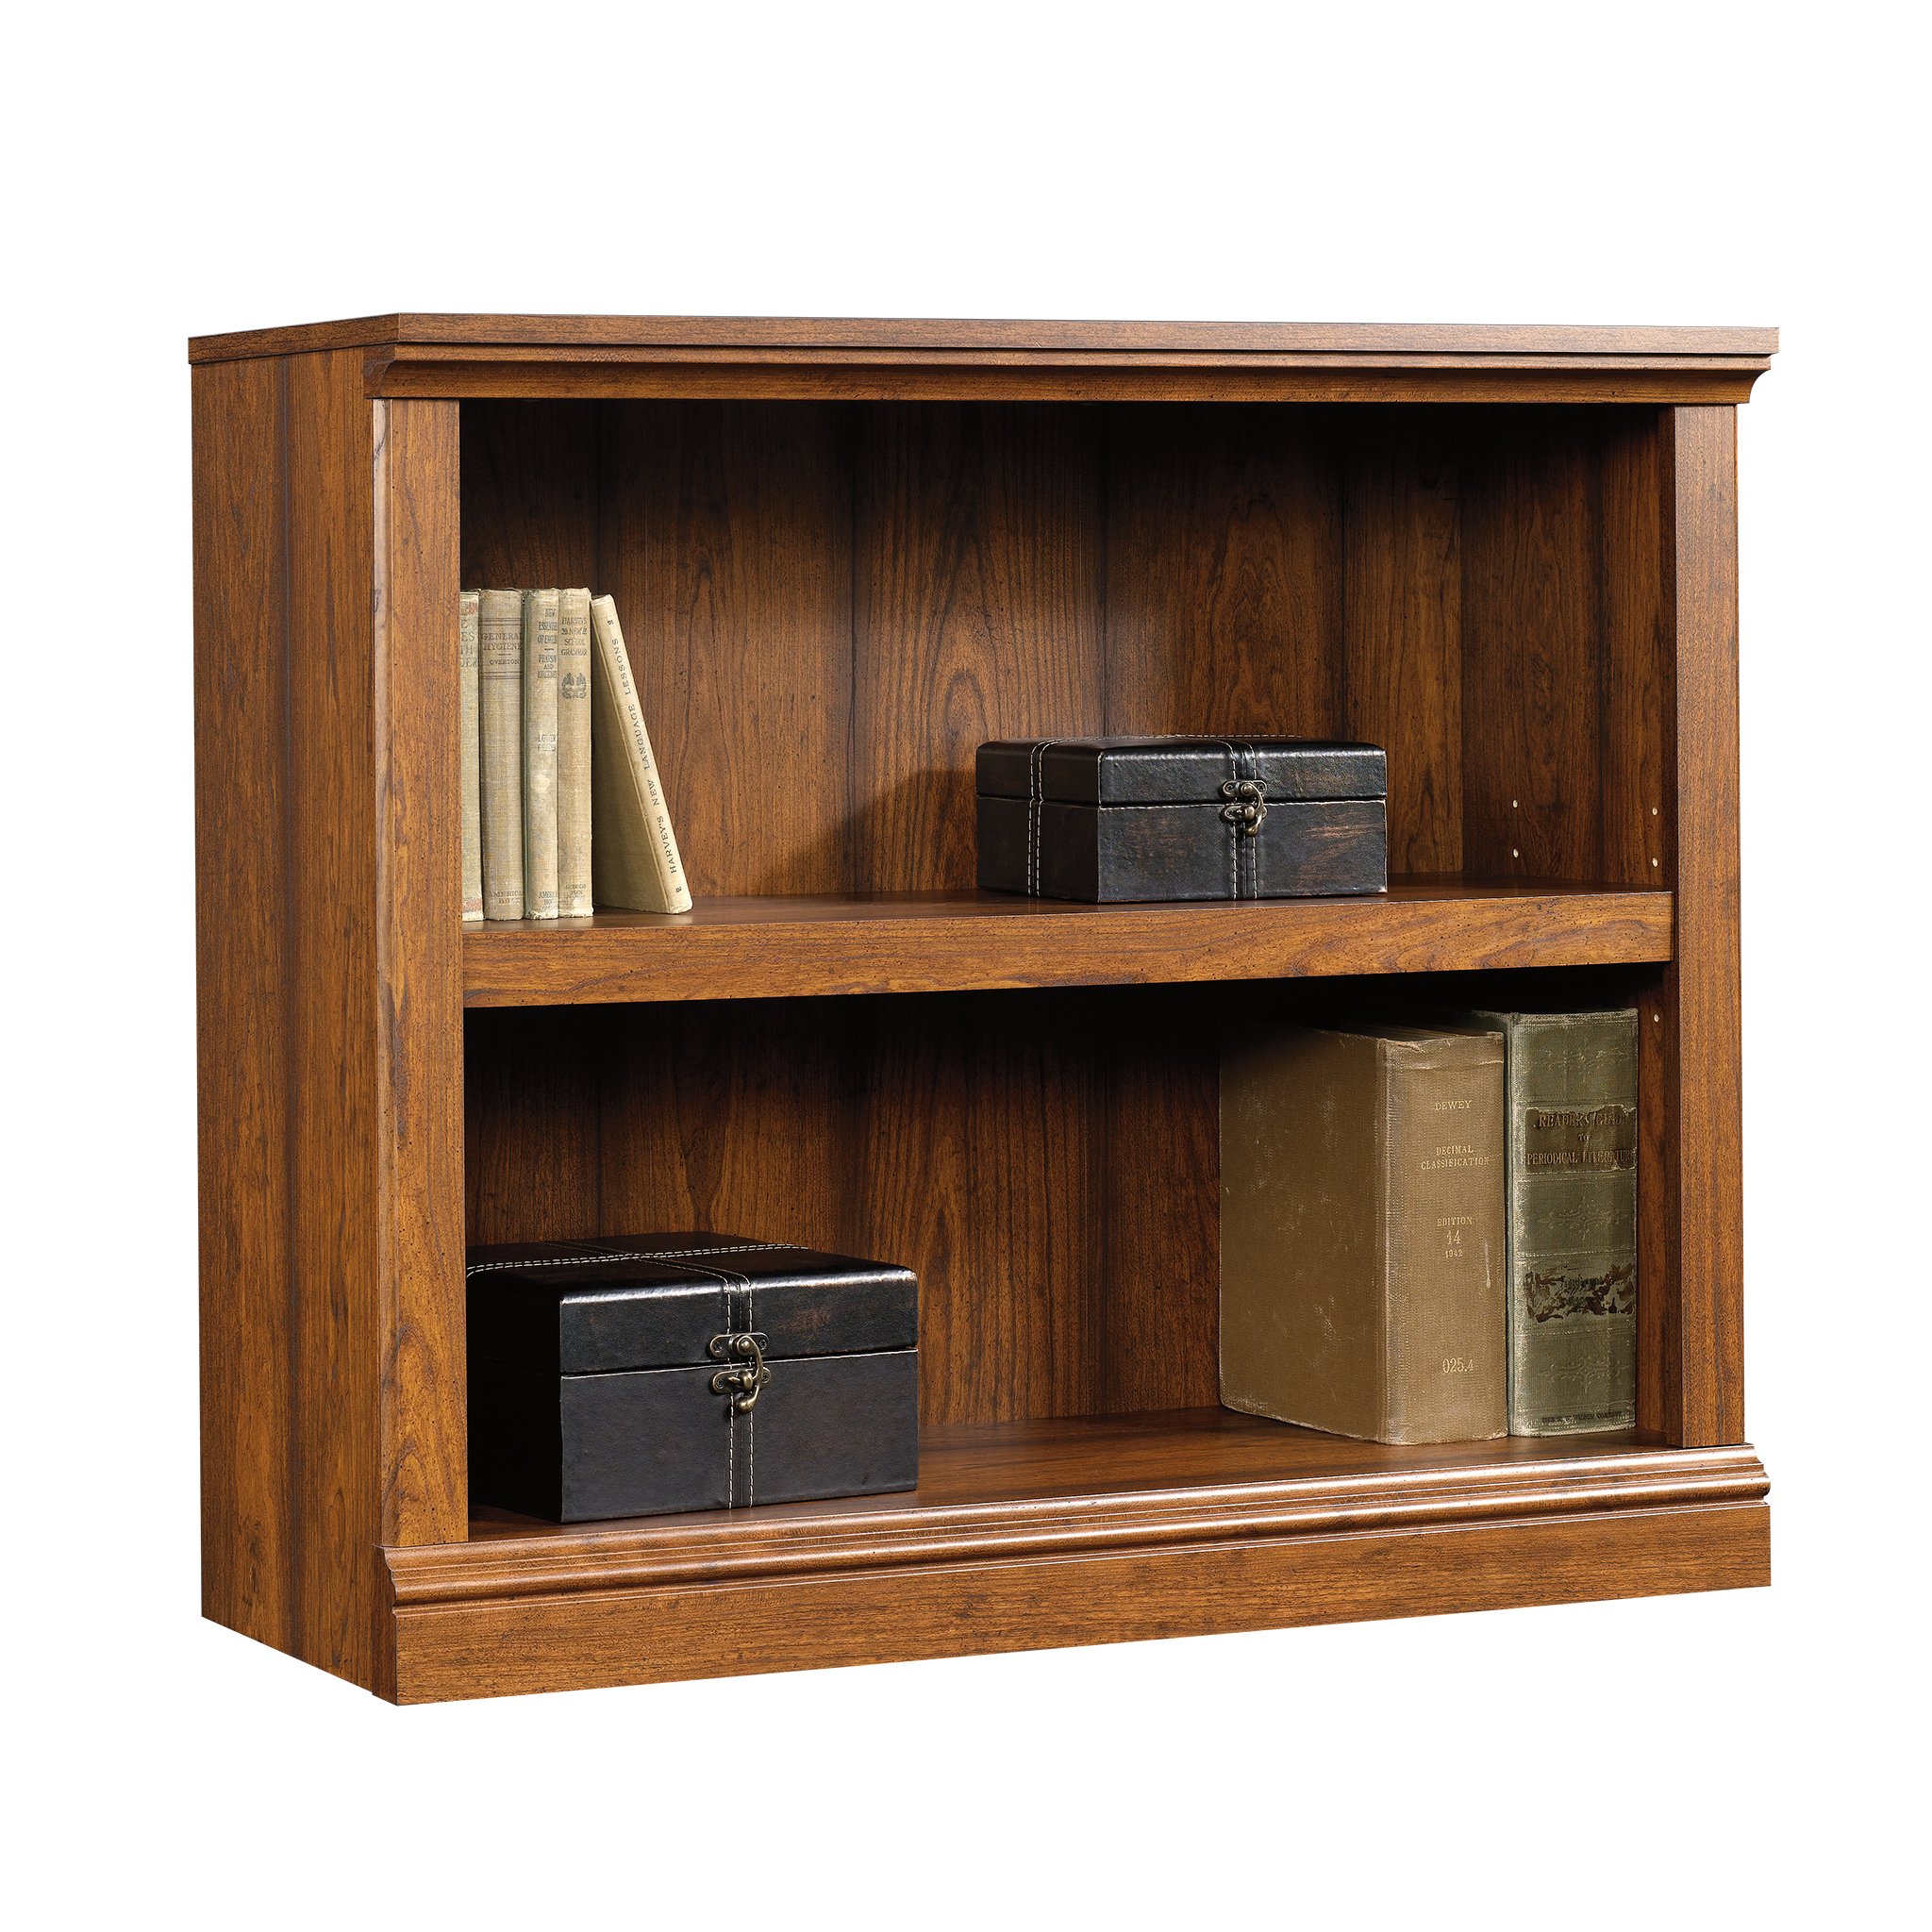 Sauder 2-Shelf Bookcase, Washington Cherry